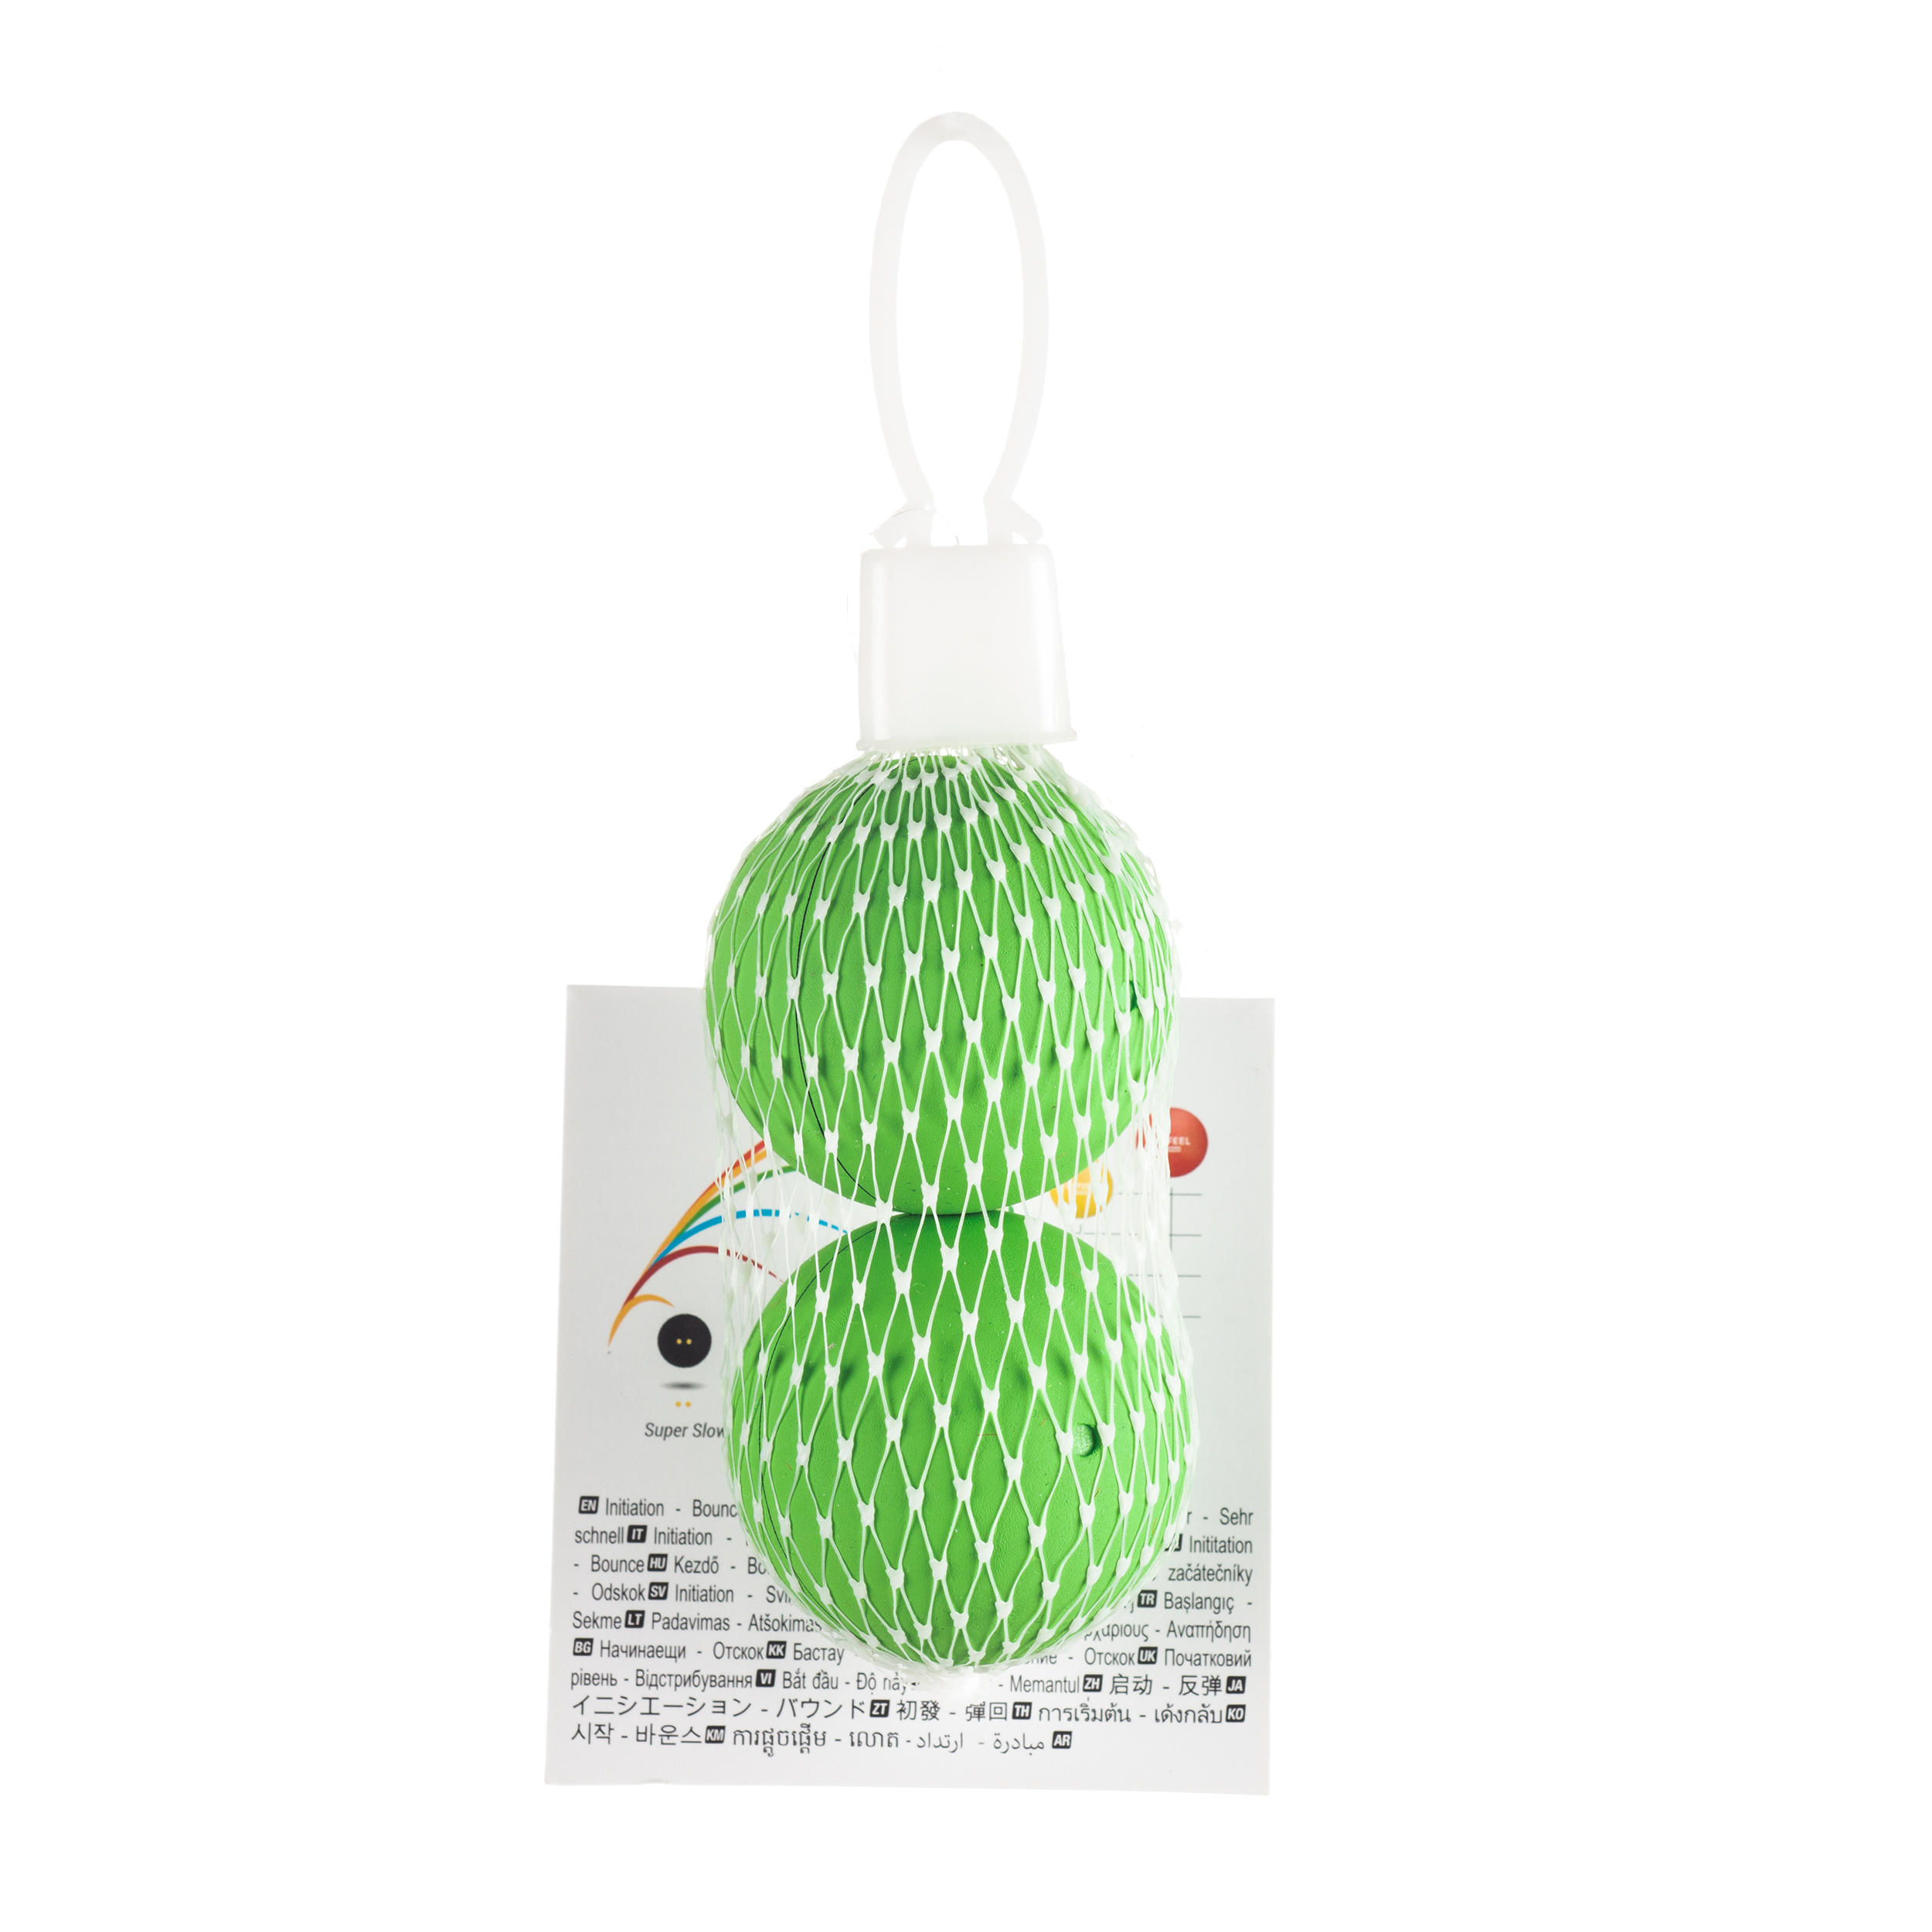 SB 160 Beginner Squash Ball - Green 2/3